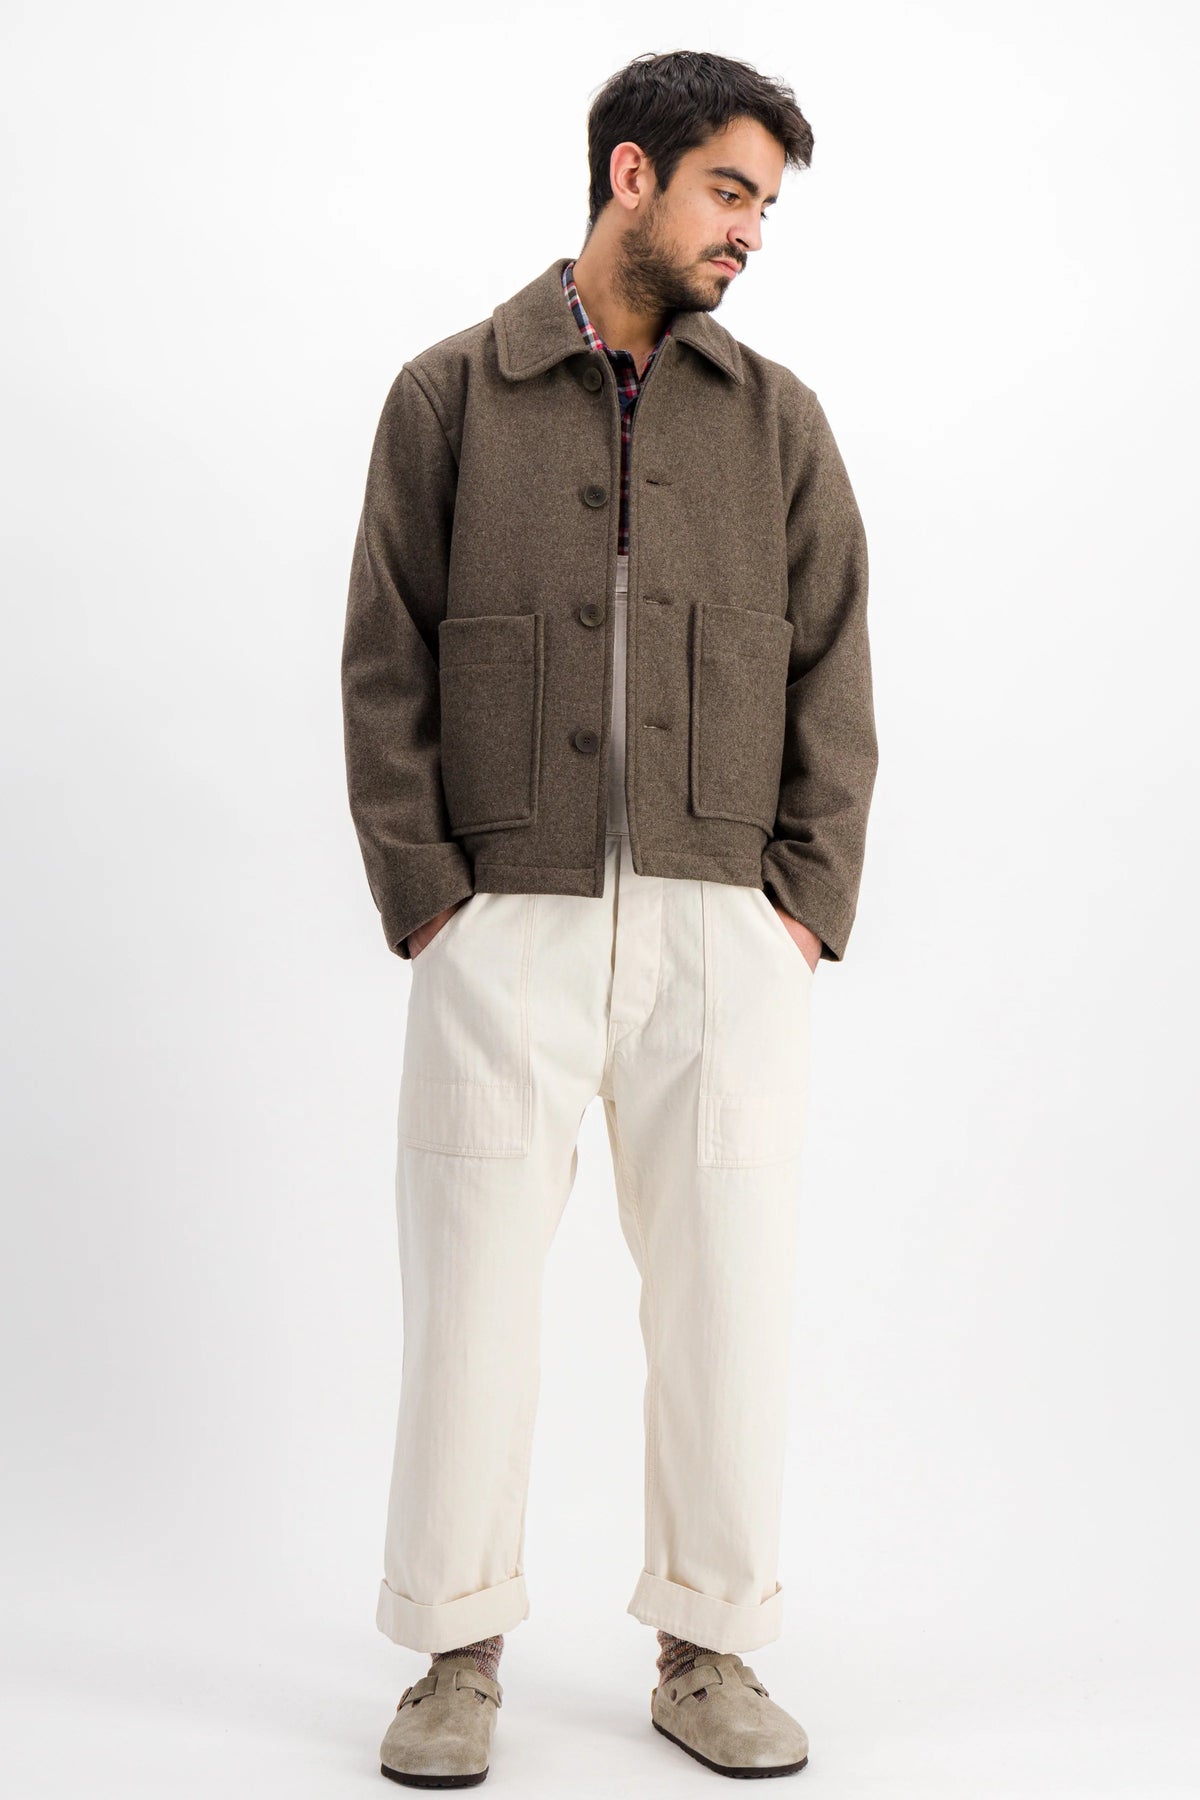 PARAGES CLOTHING Aubrac Wool Jacket - Brown